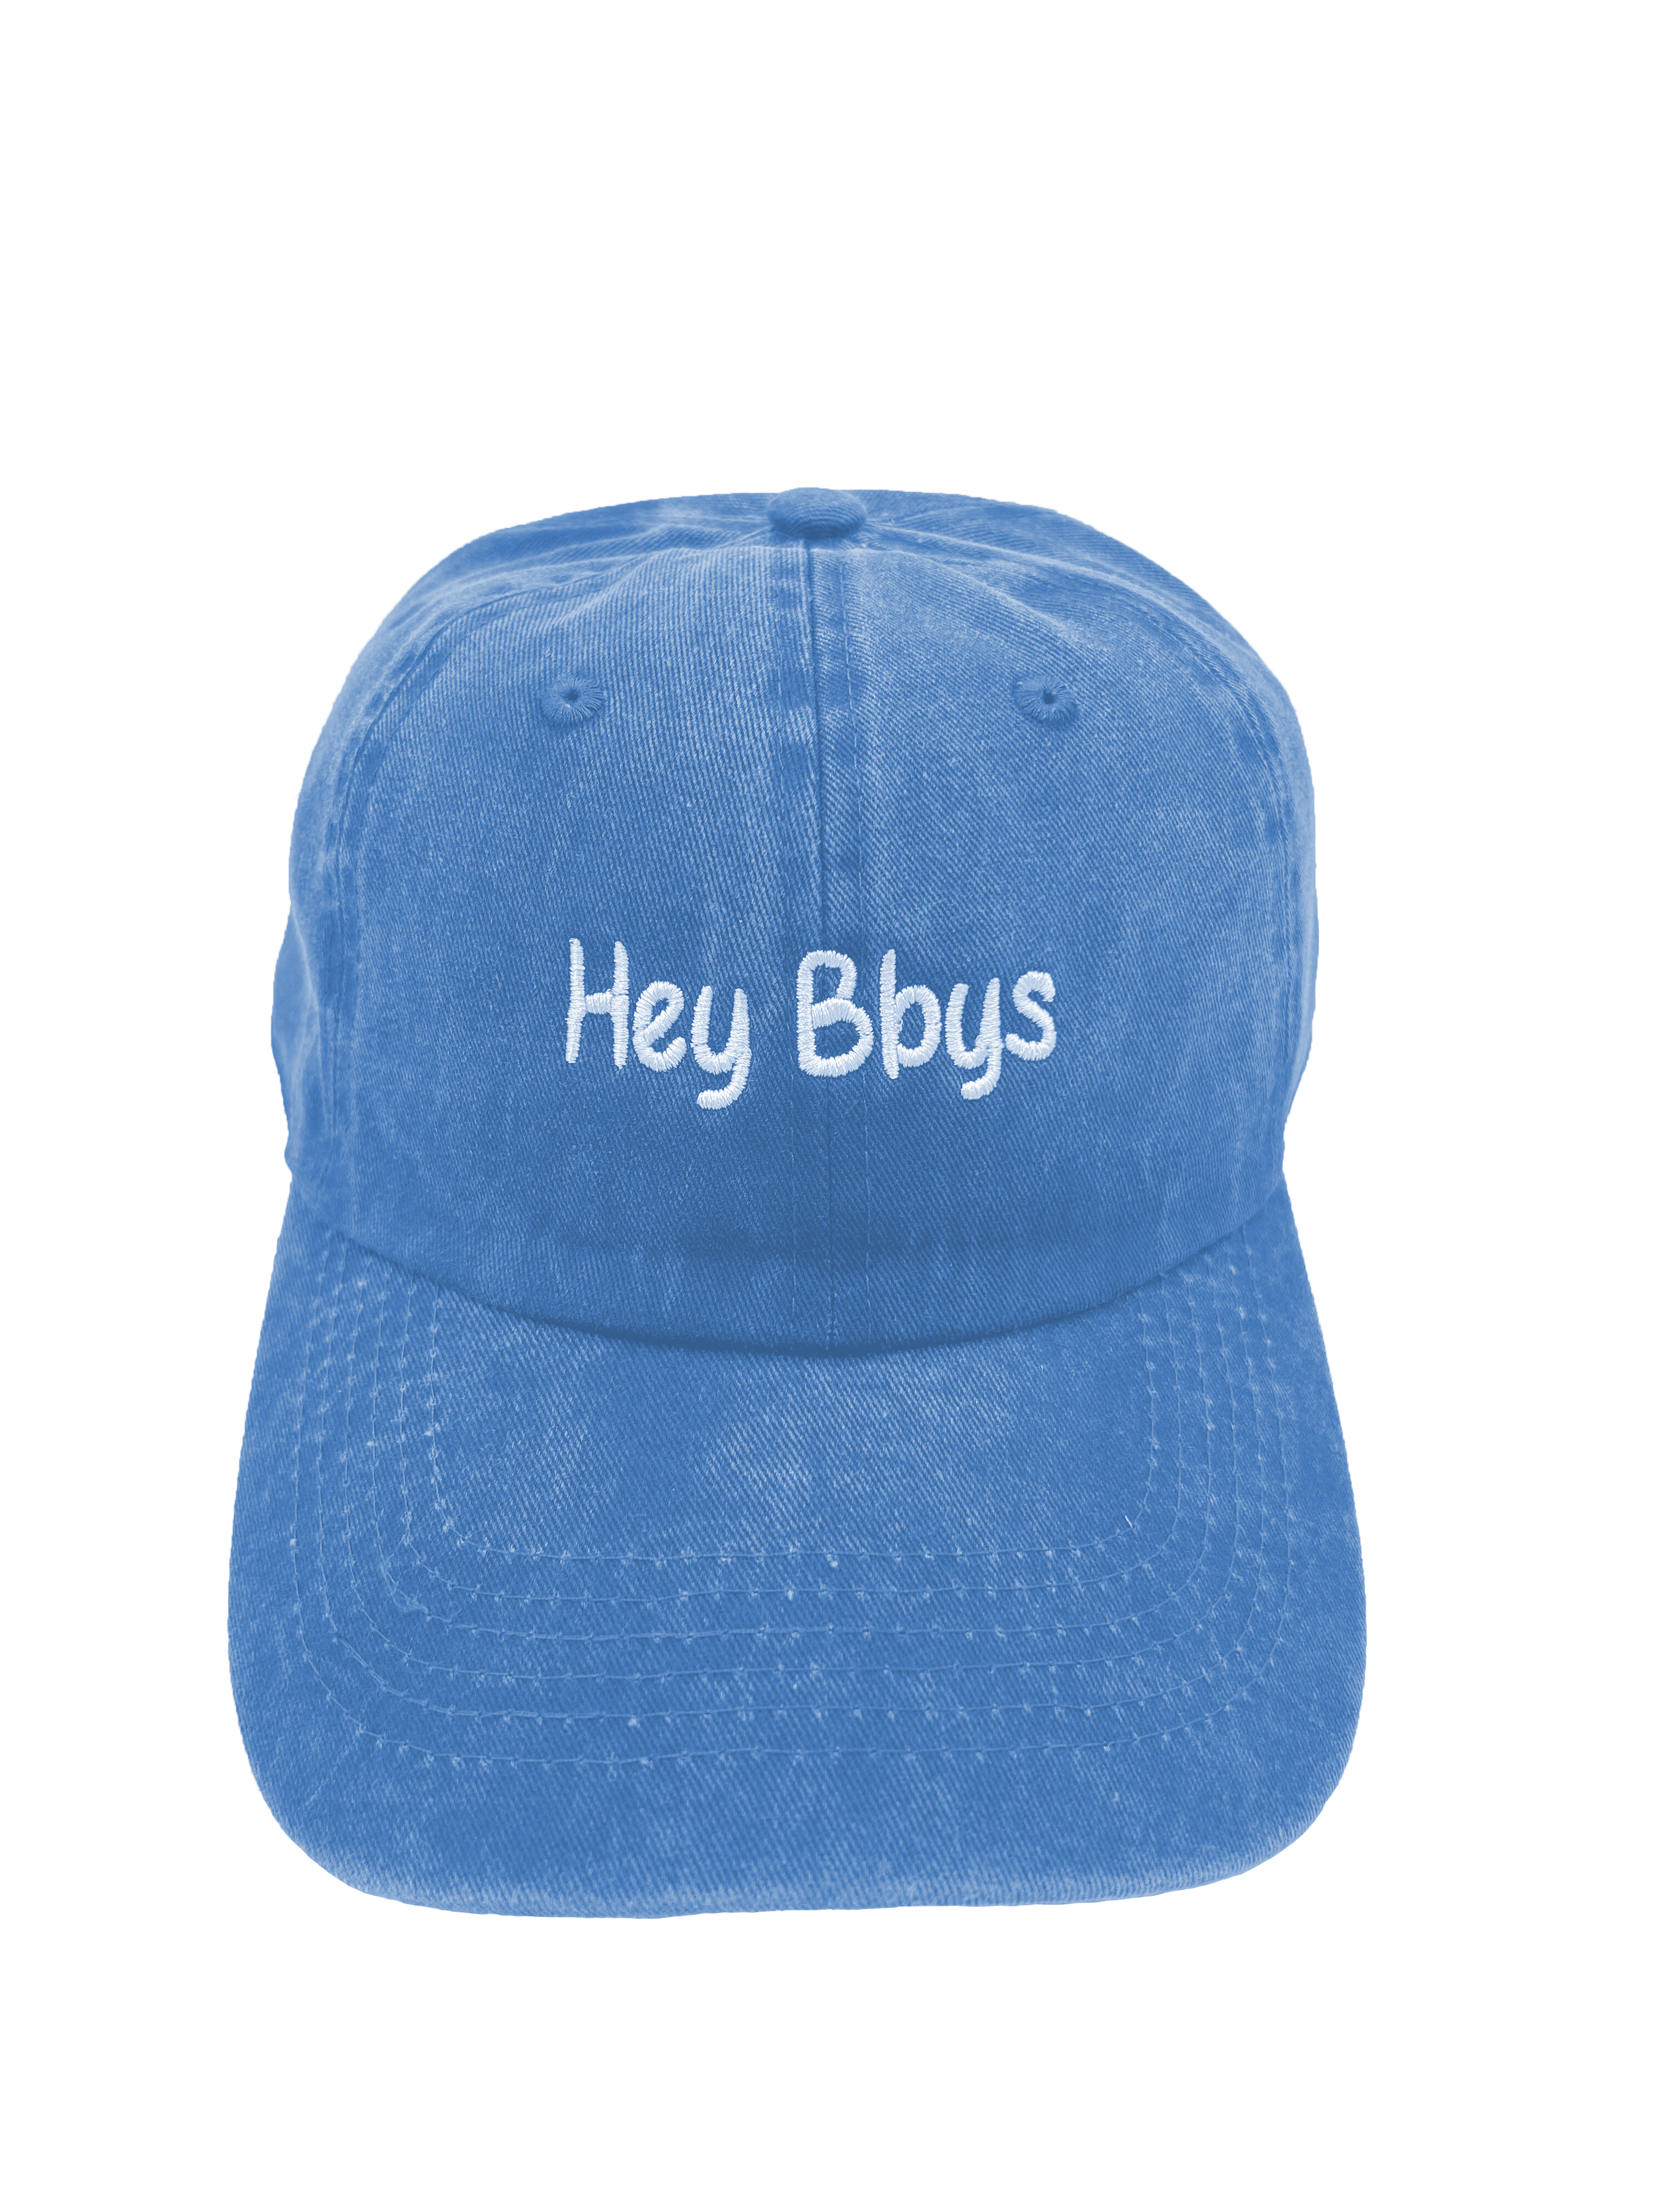 Hey Bbys Vintage Blue Dad Hat